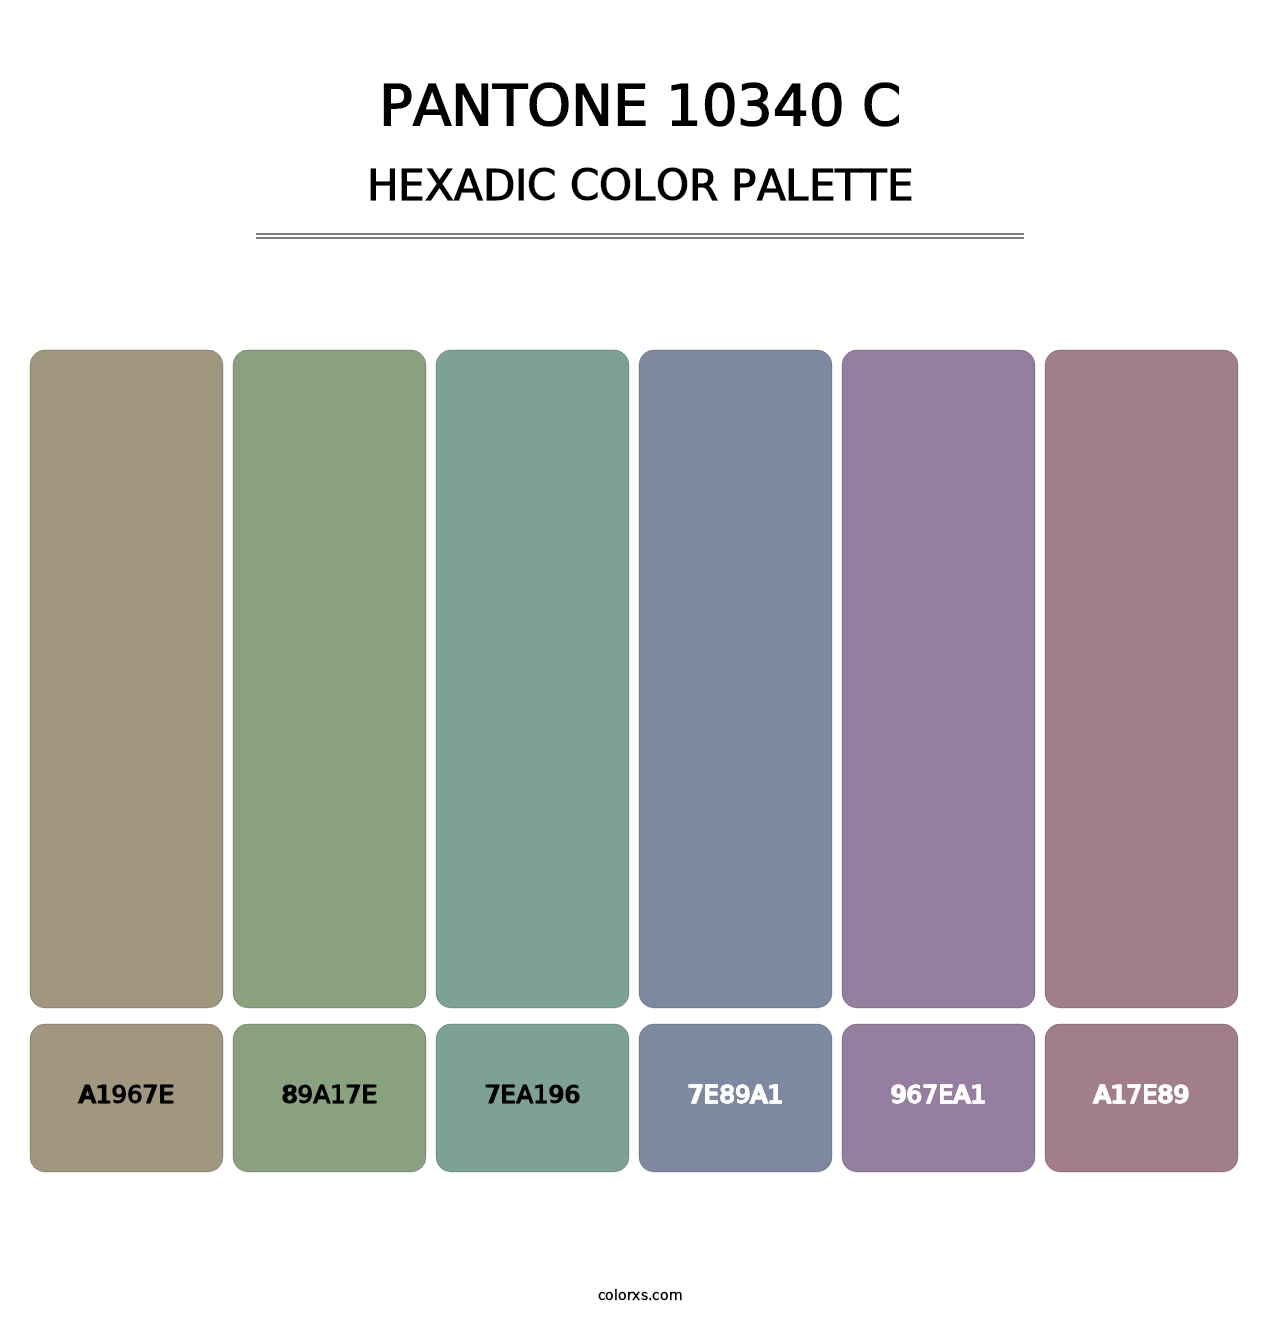 PANTONE 10340 C - Hexadic Color Palette